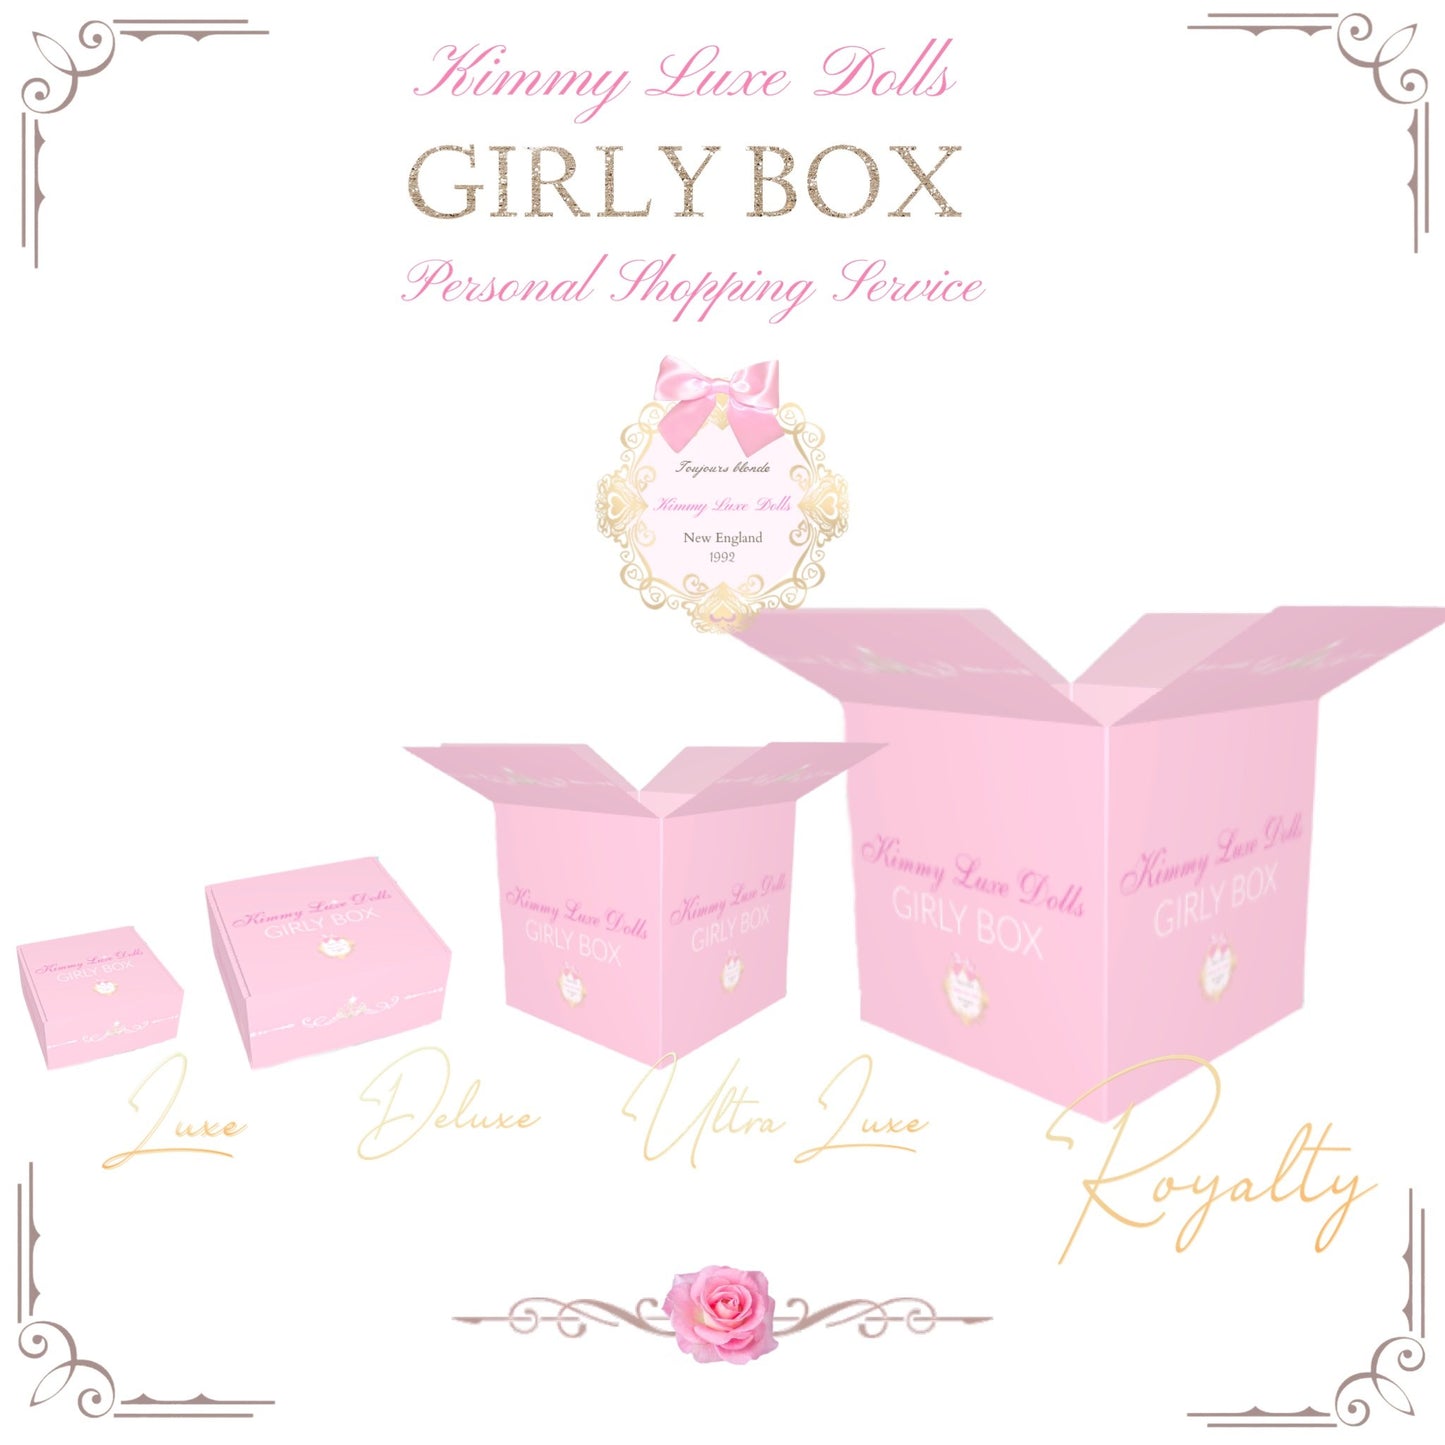 Girly Box 💗 October